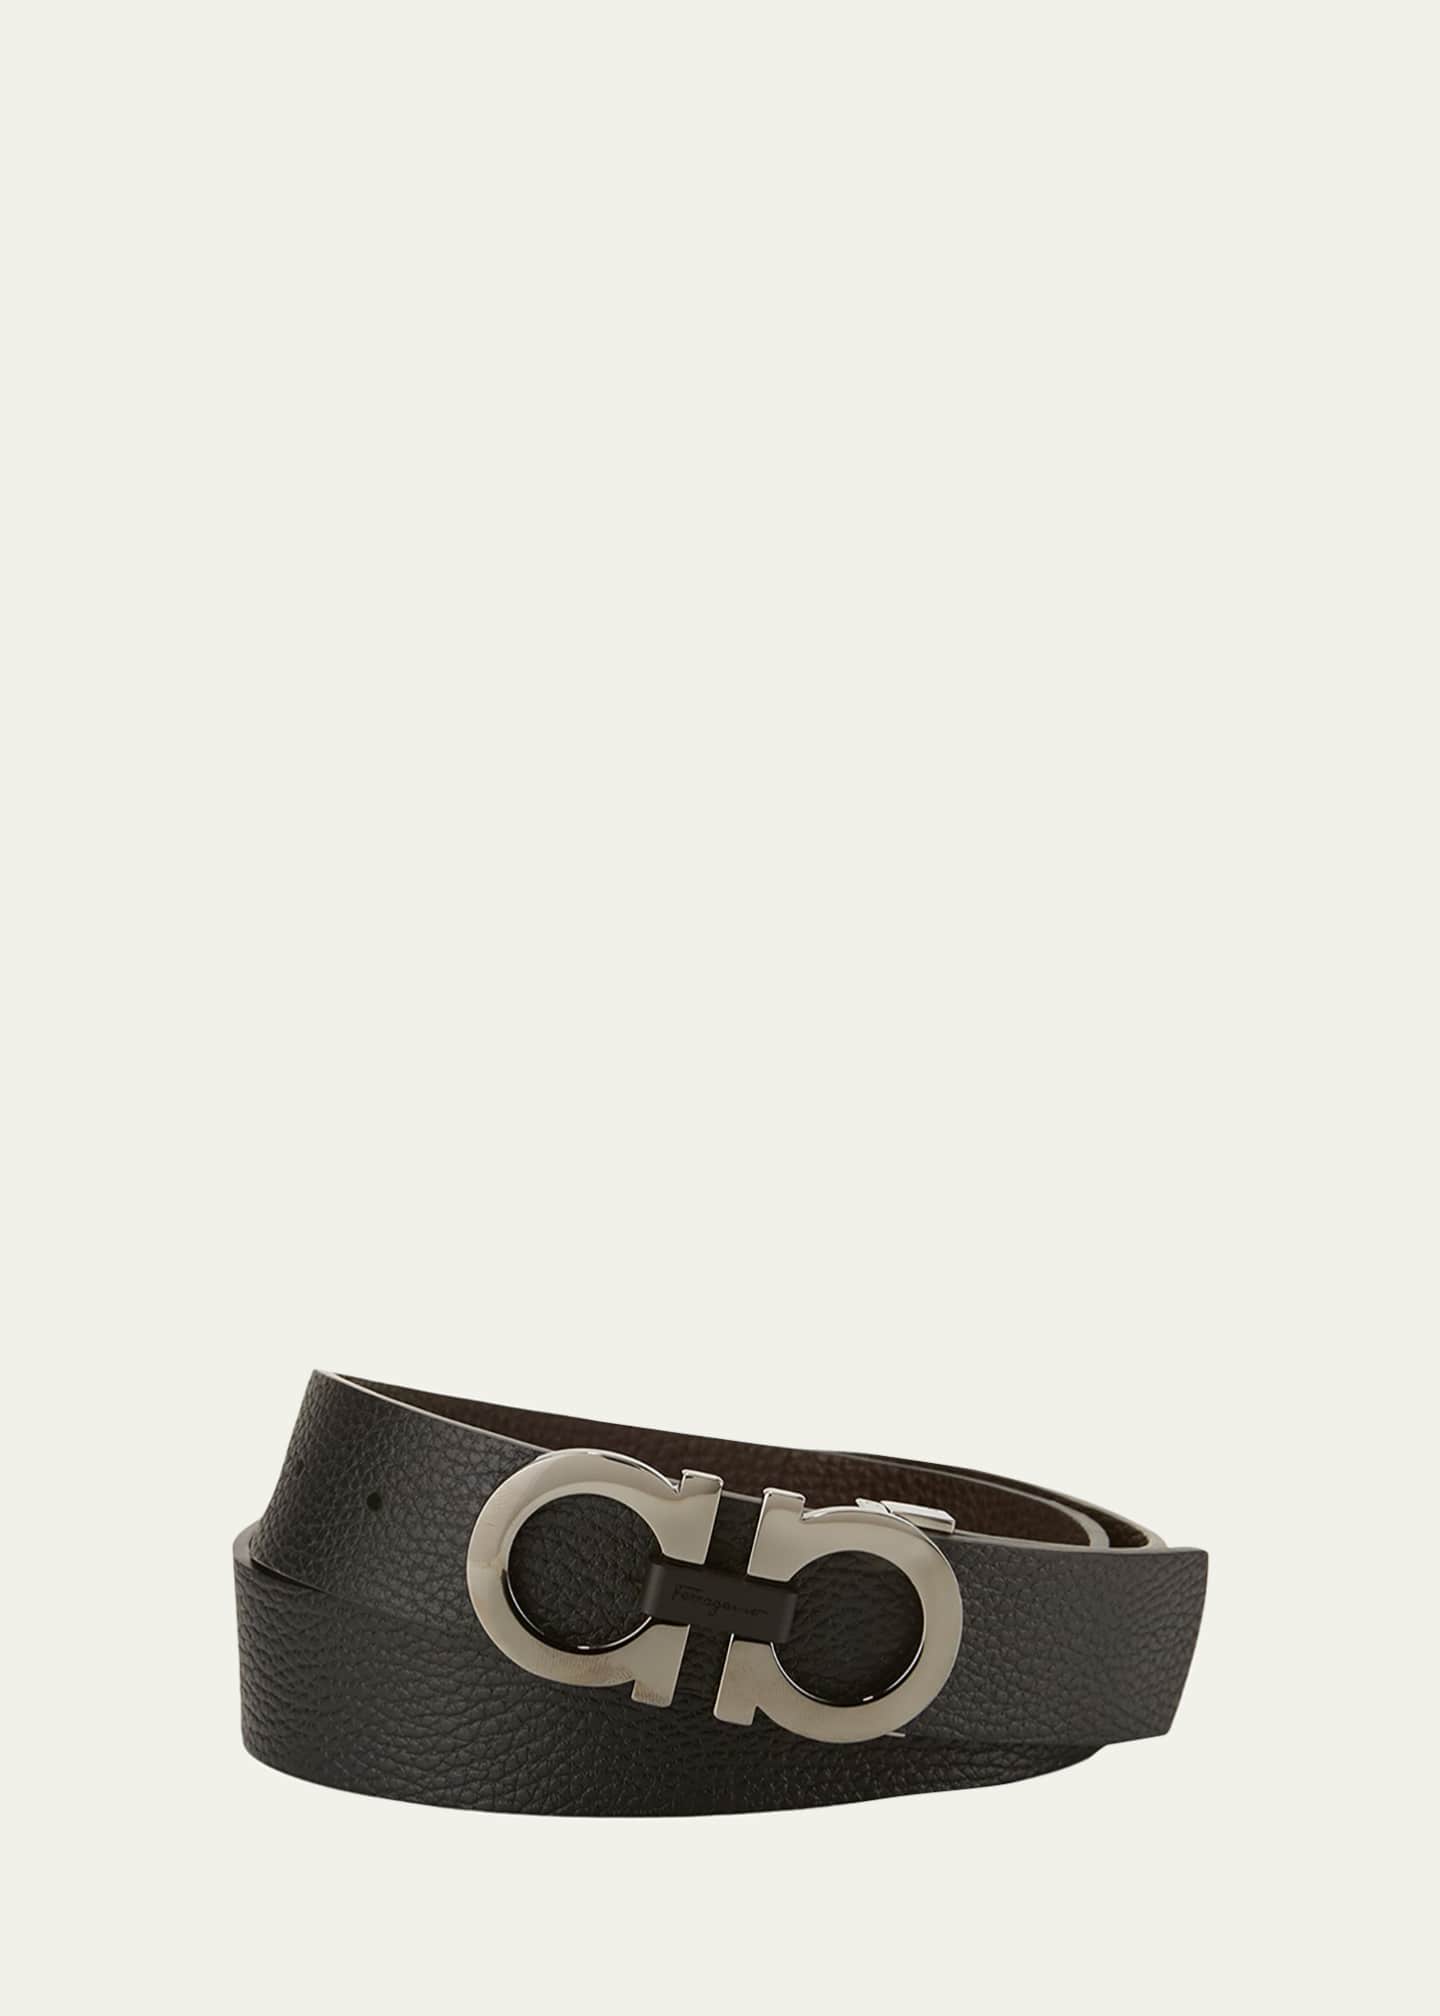 Ferragamo Gancini Reversible & Adjustable Leather Belt - Black - 75 cm